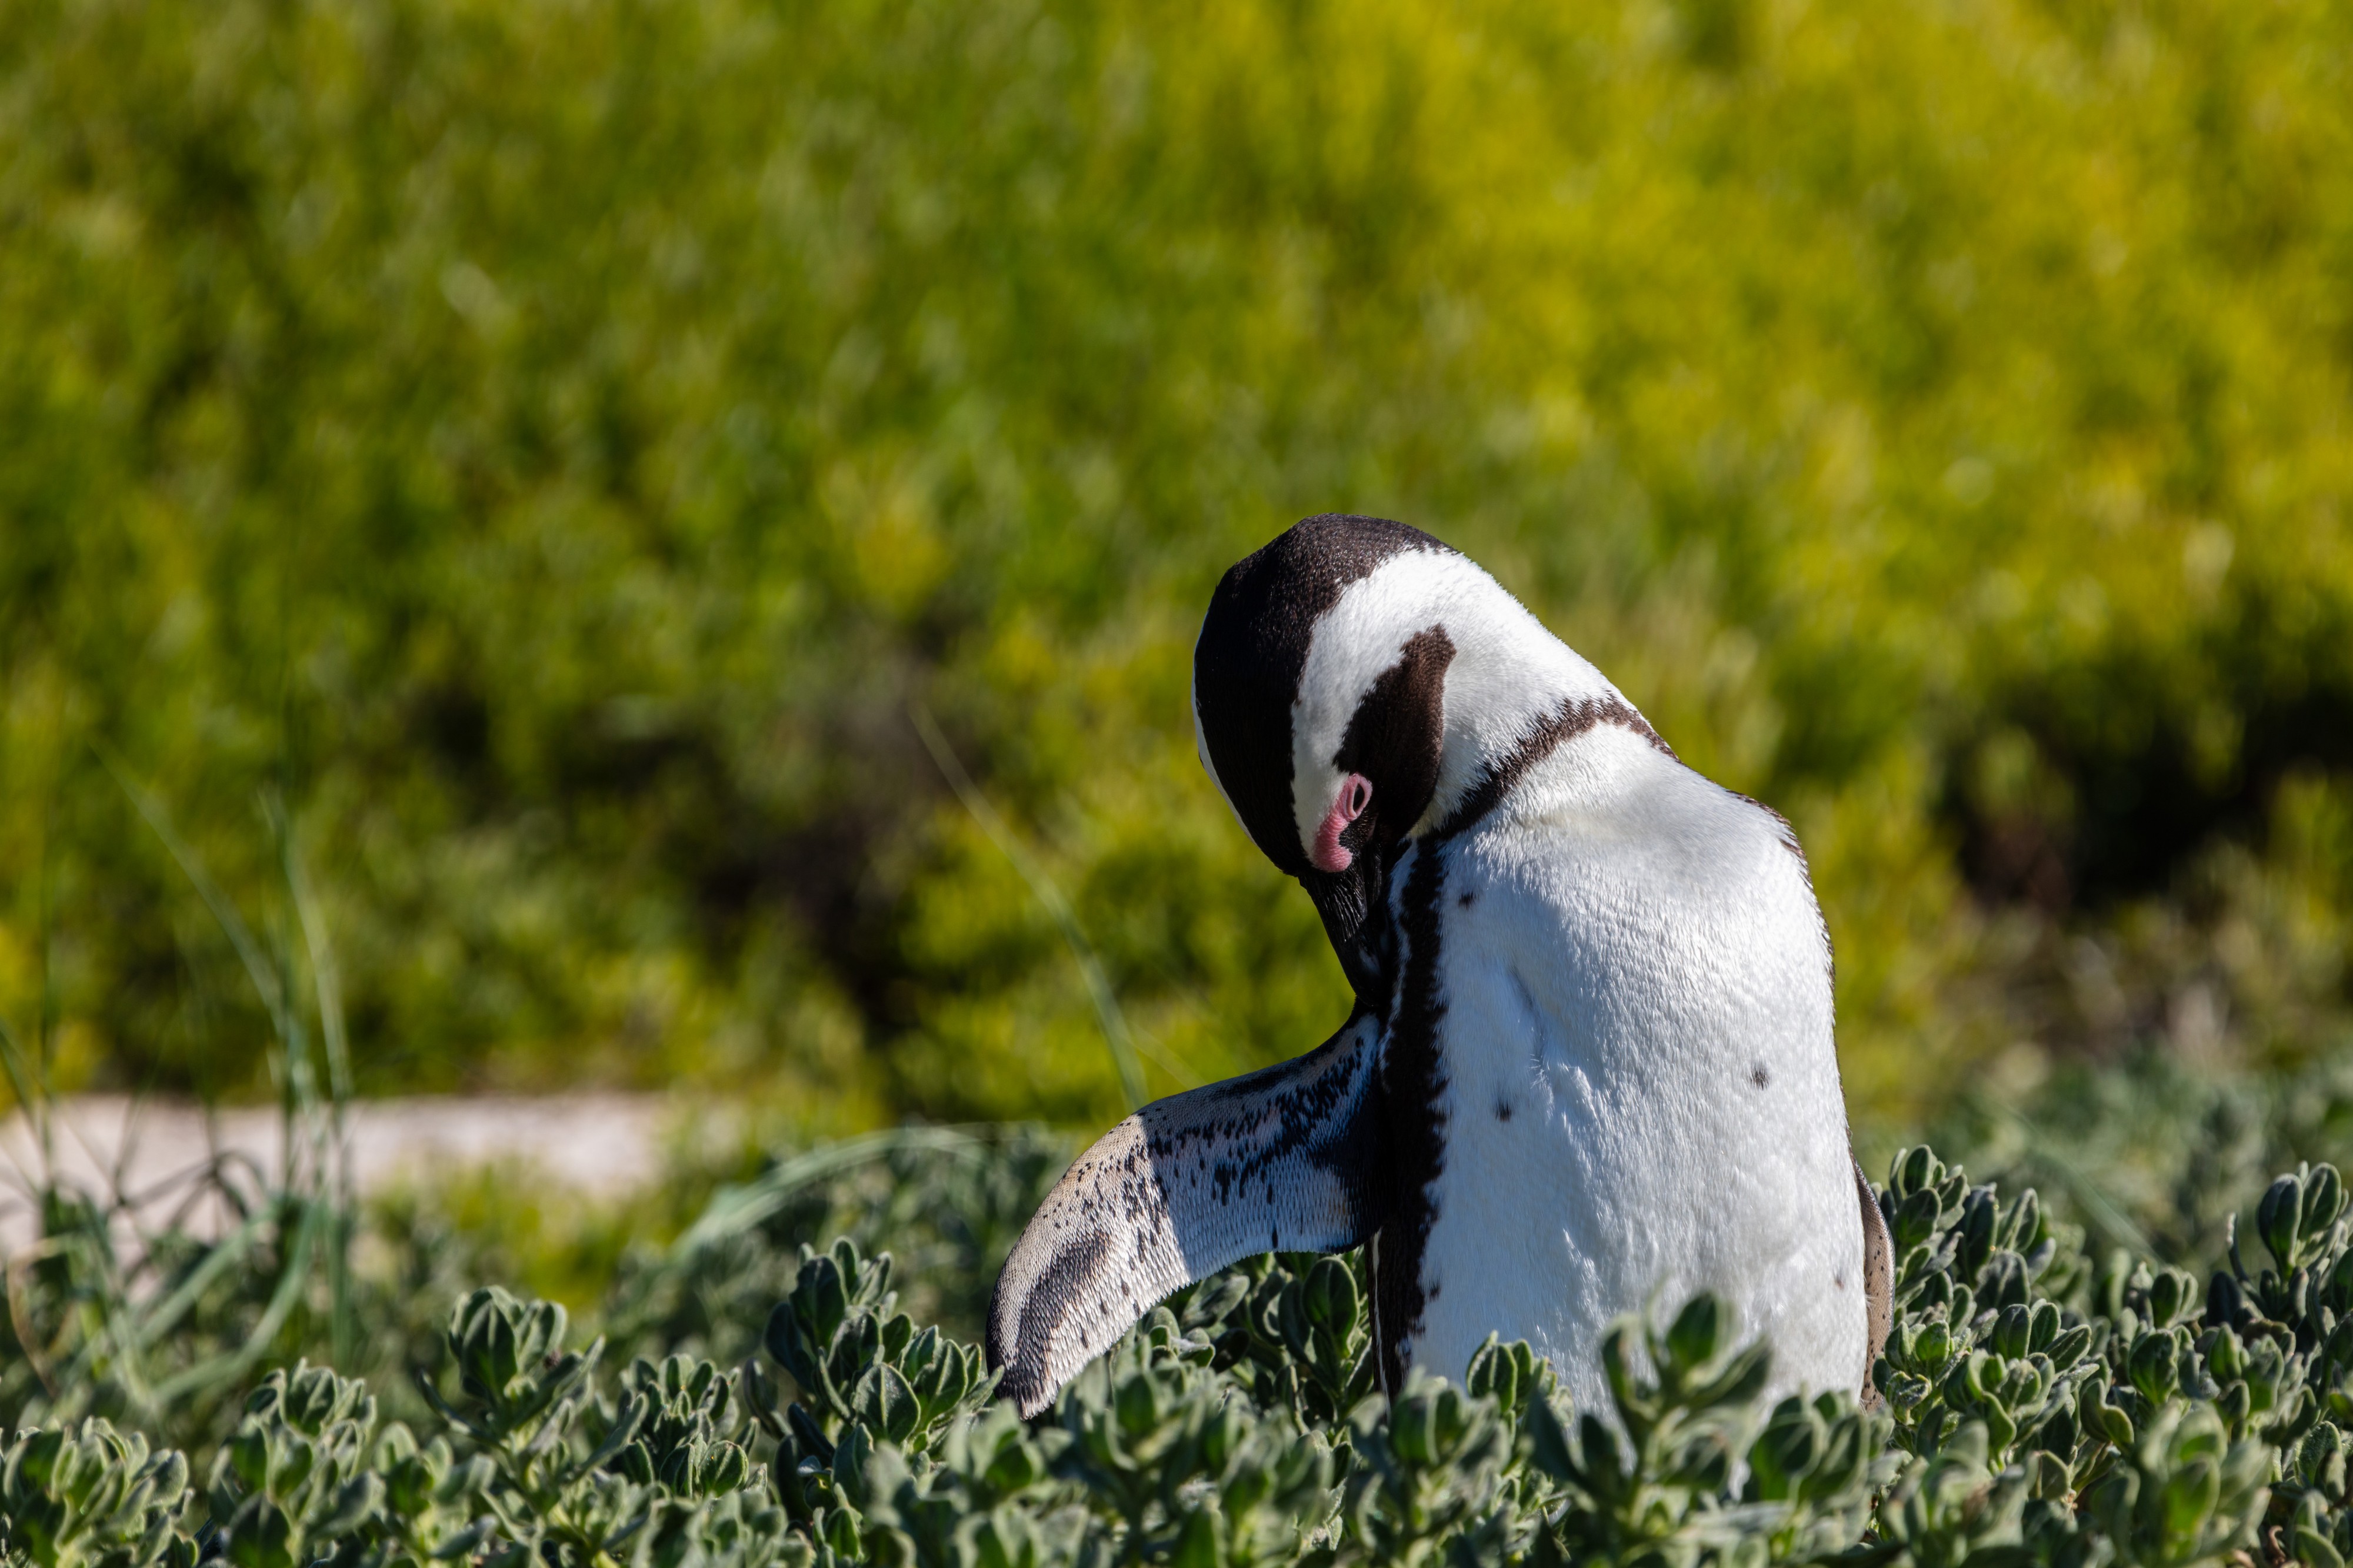 Pingüino de El Cabo (Spheniscus demersus), Playa de Boulders, Simon's Town, Sudáfrica, 2018-07-23, DD 45